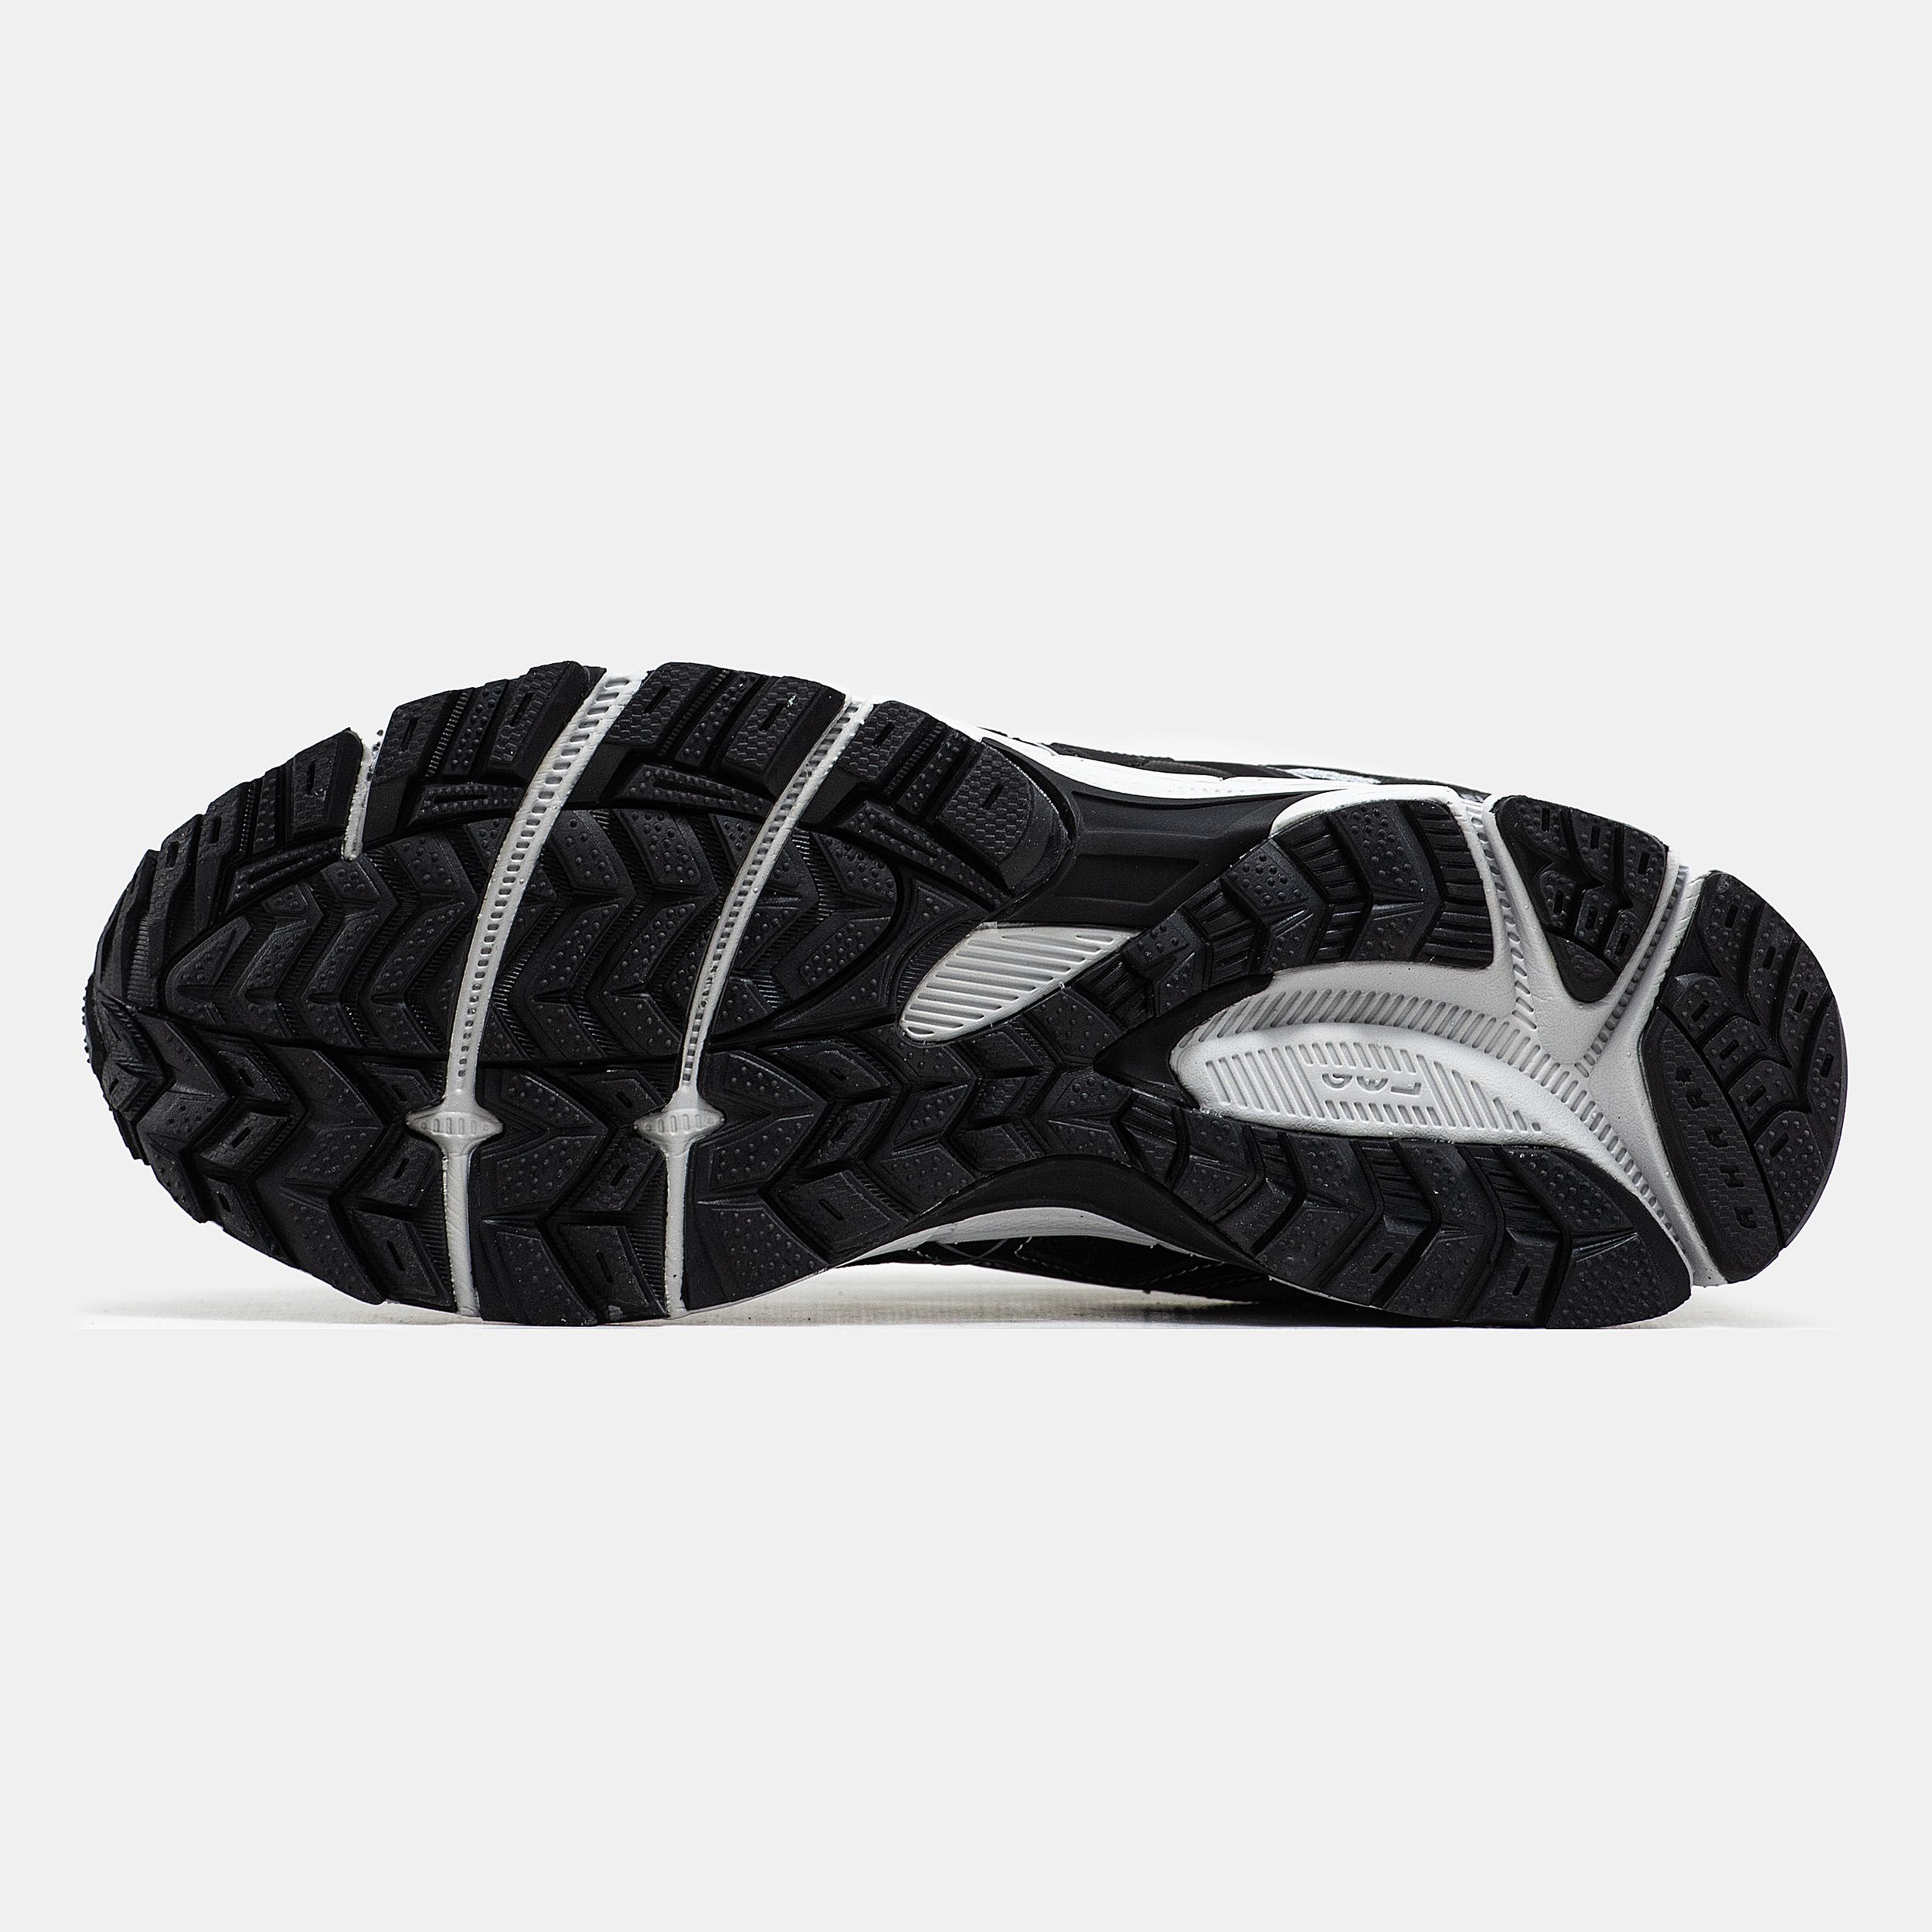 Мужские кроссовки Asics Gel-Kahana 8 black&white. Размеры 41-45